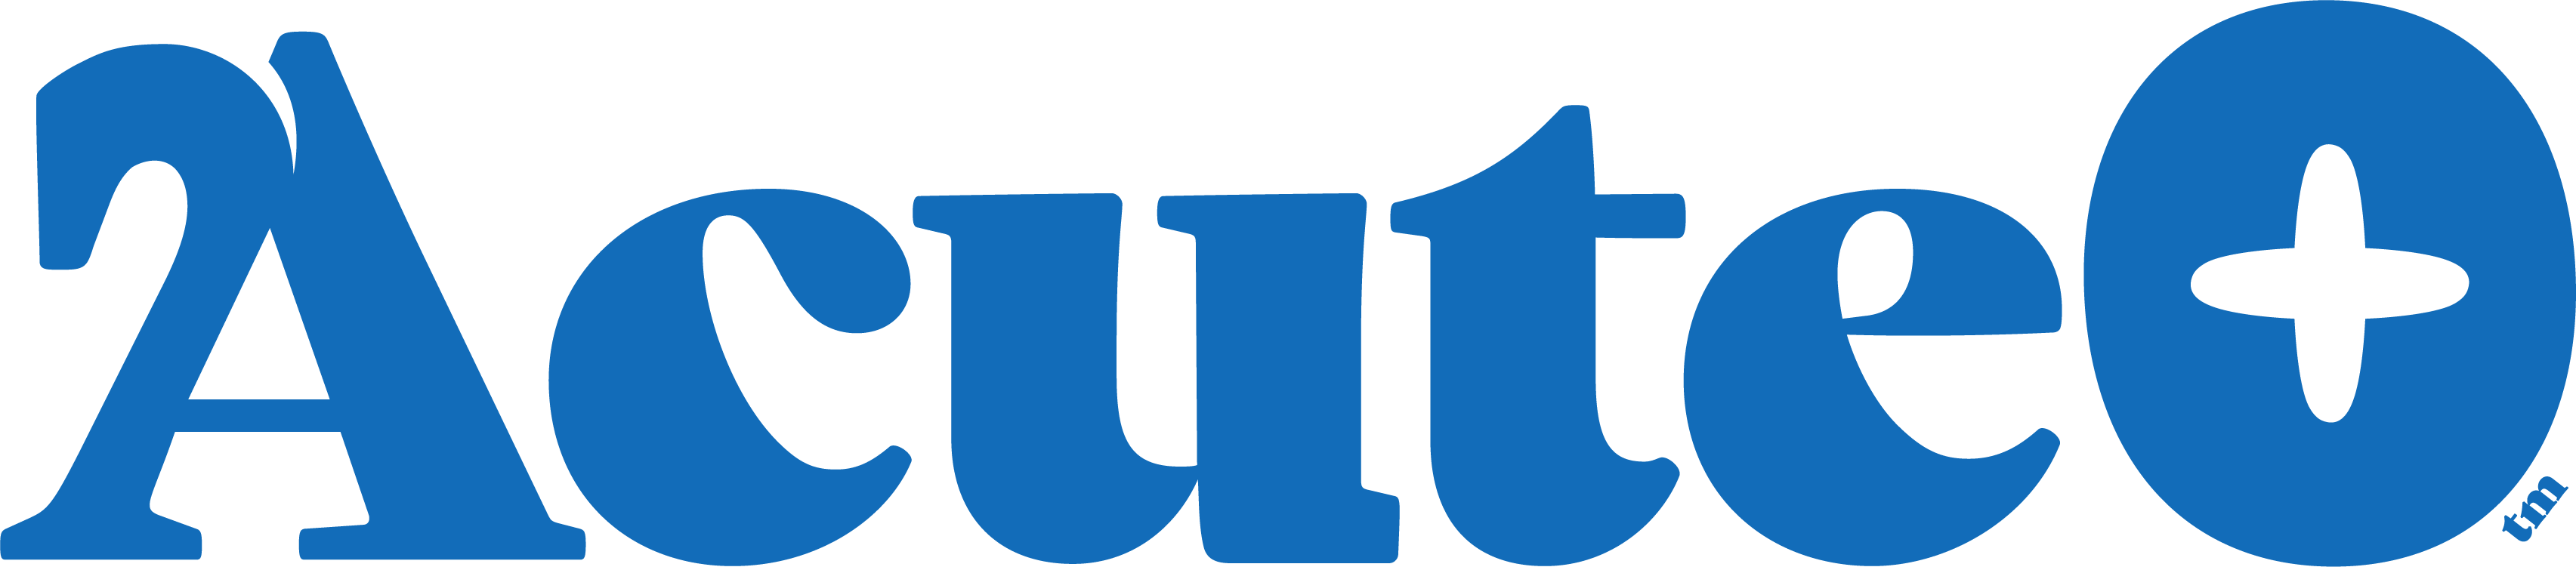 acuteplus logo blue